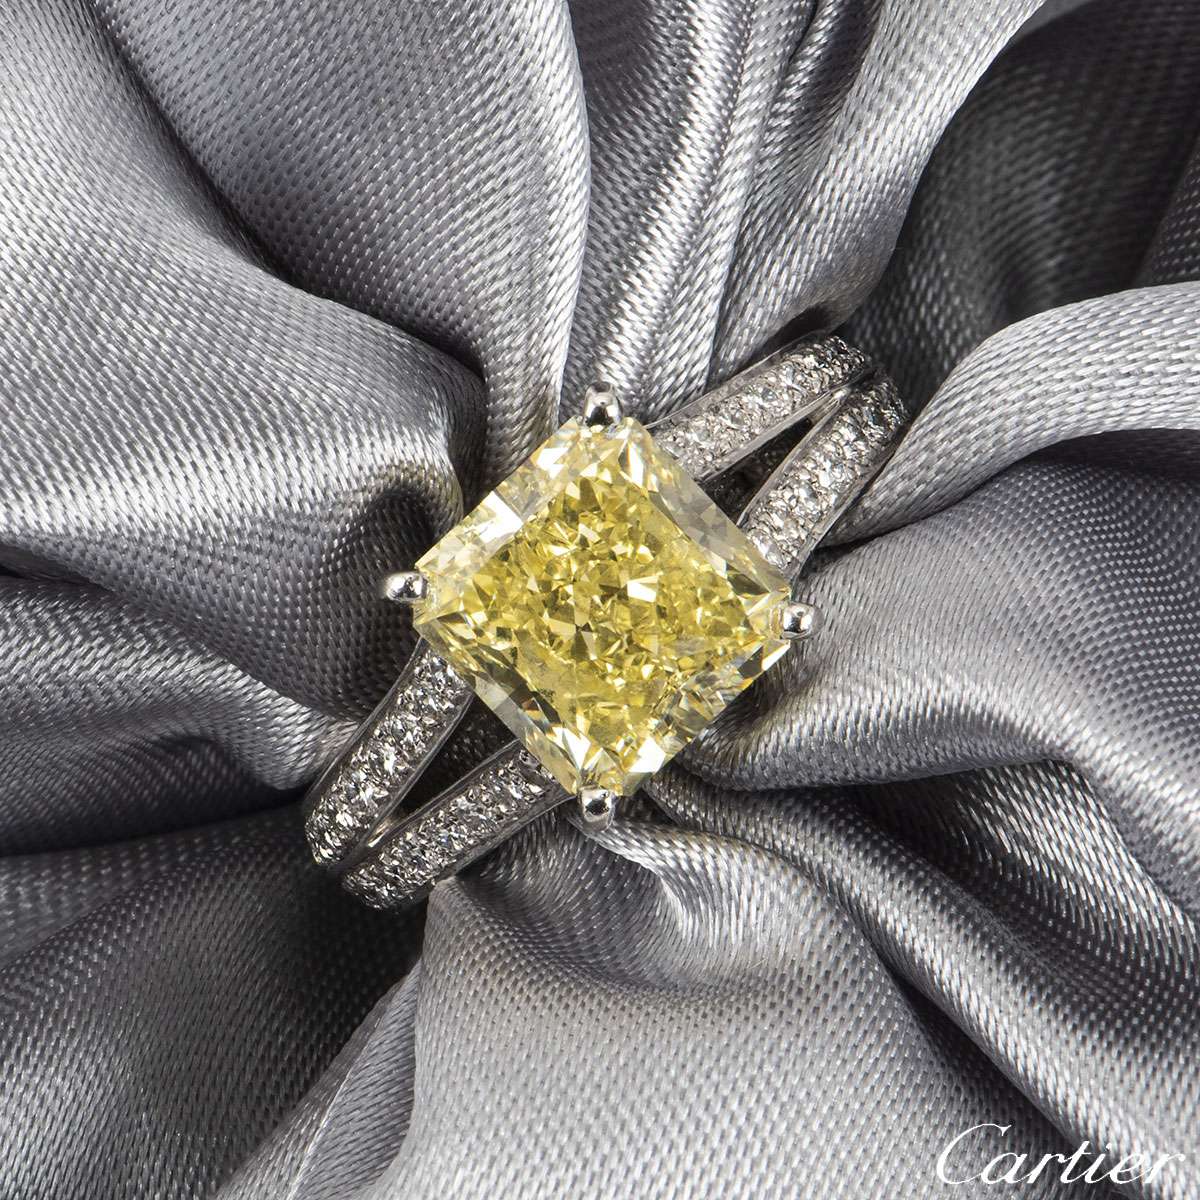 cartier canary diamond ring